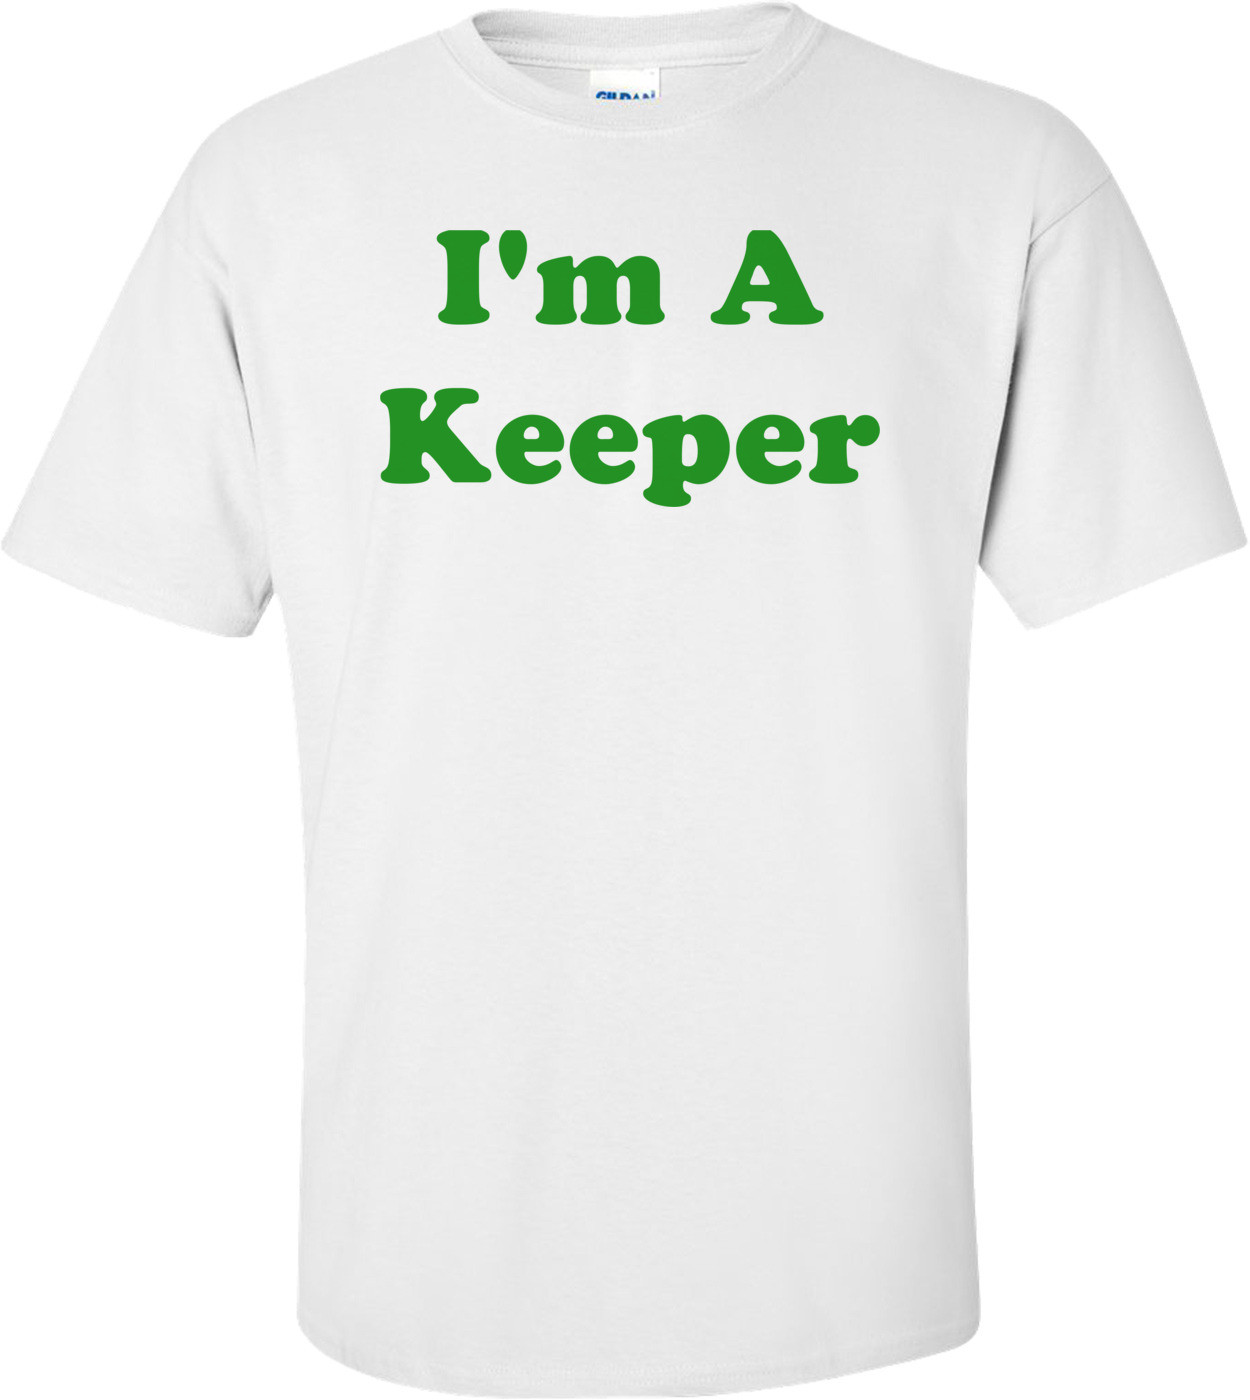 I'm A Keeper Shirt